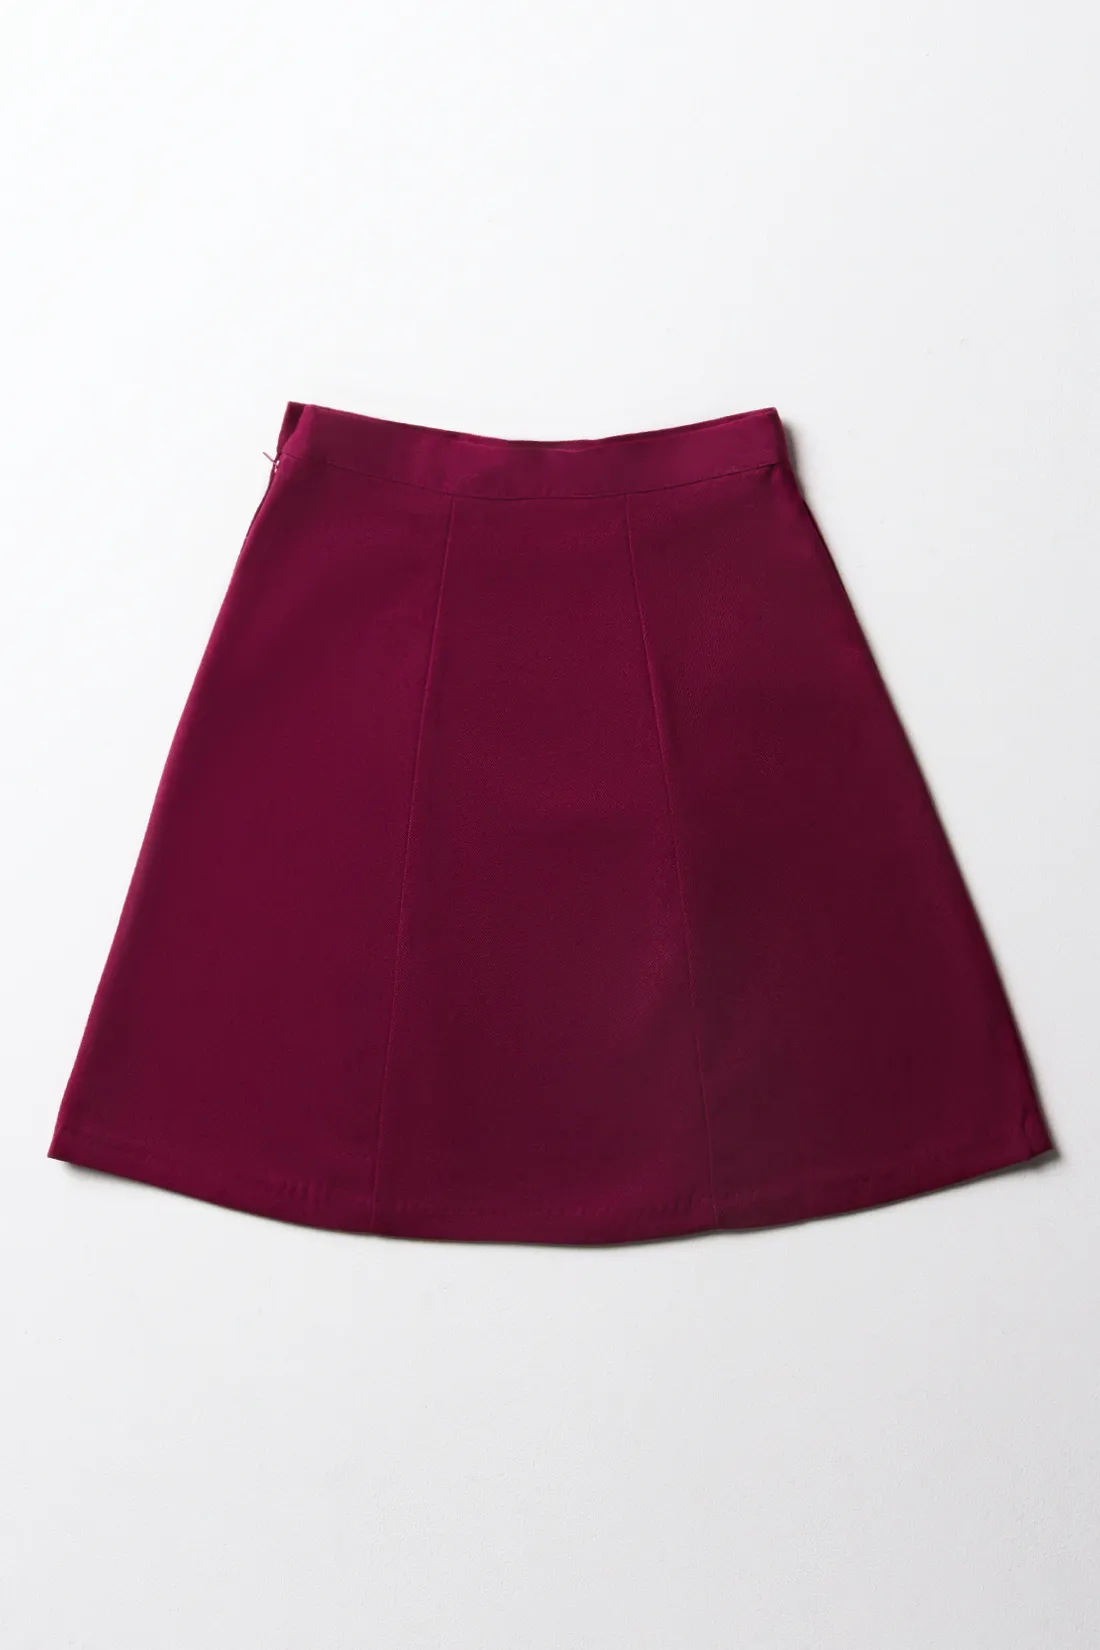 Skirt maroon - Kids's School Clothes | Ackermans